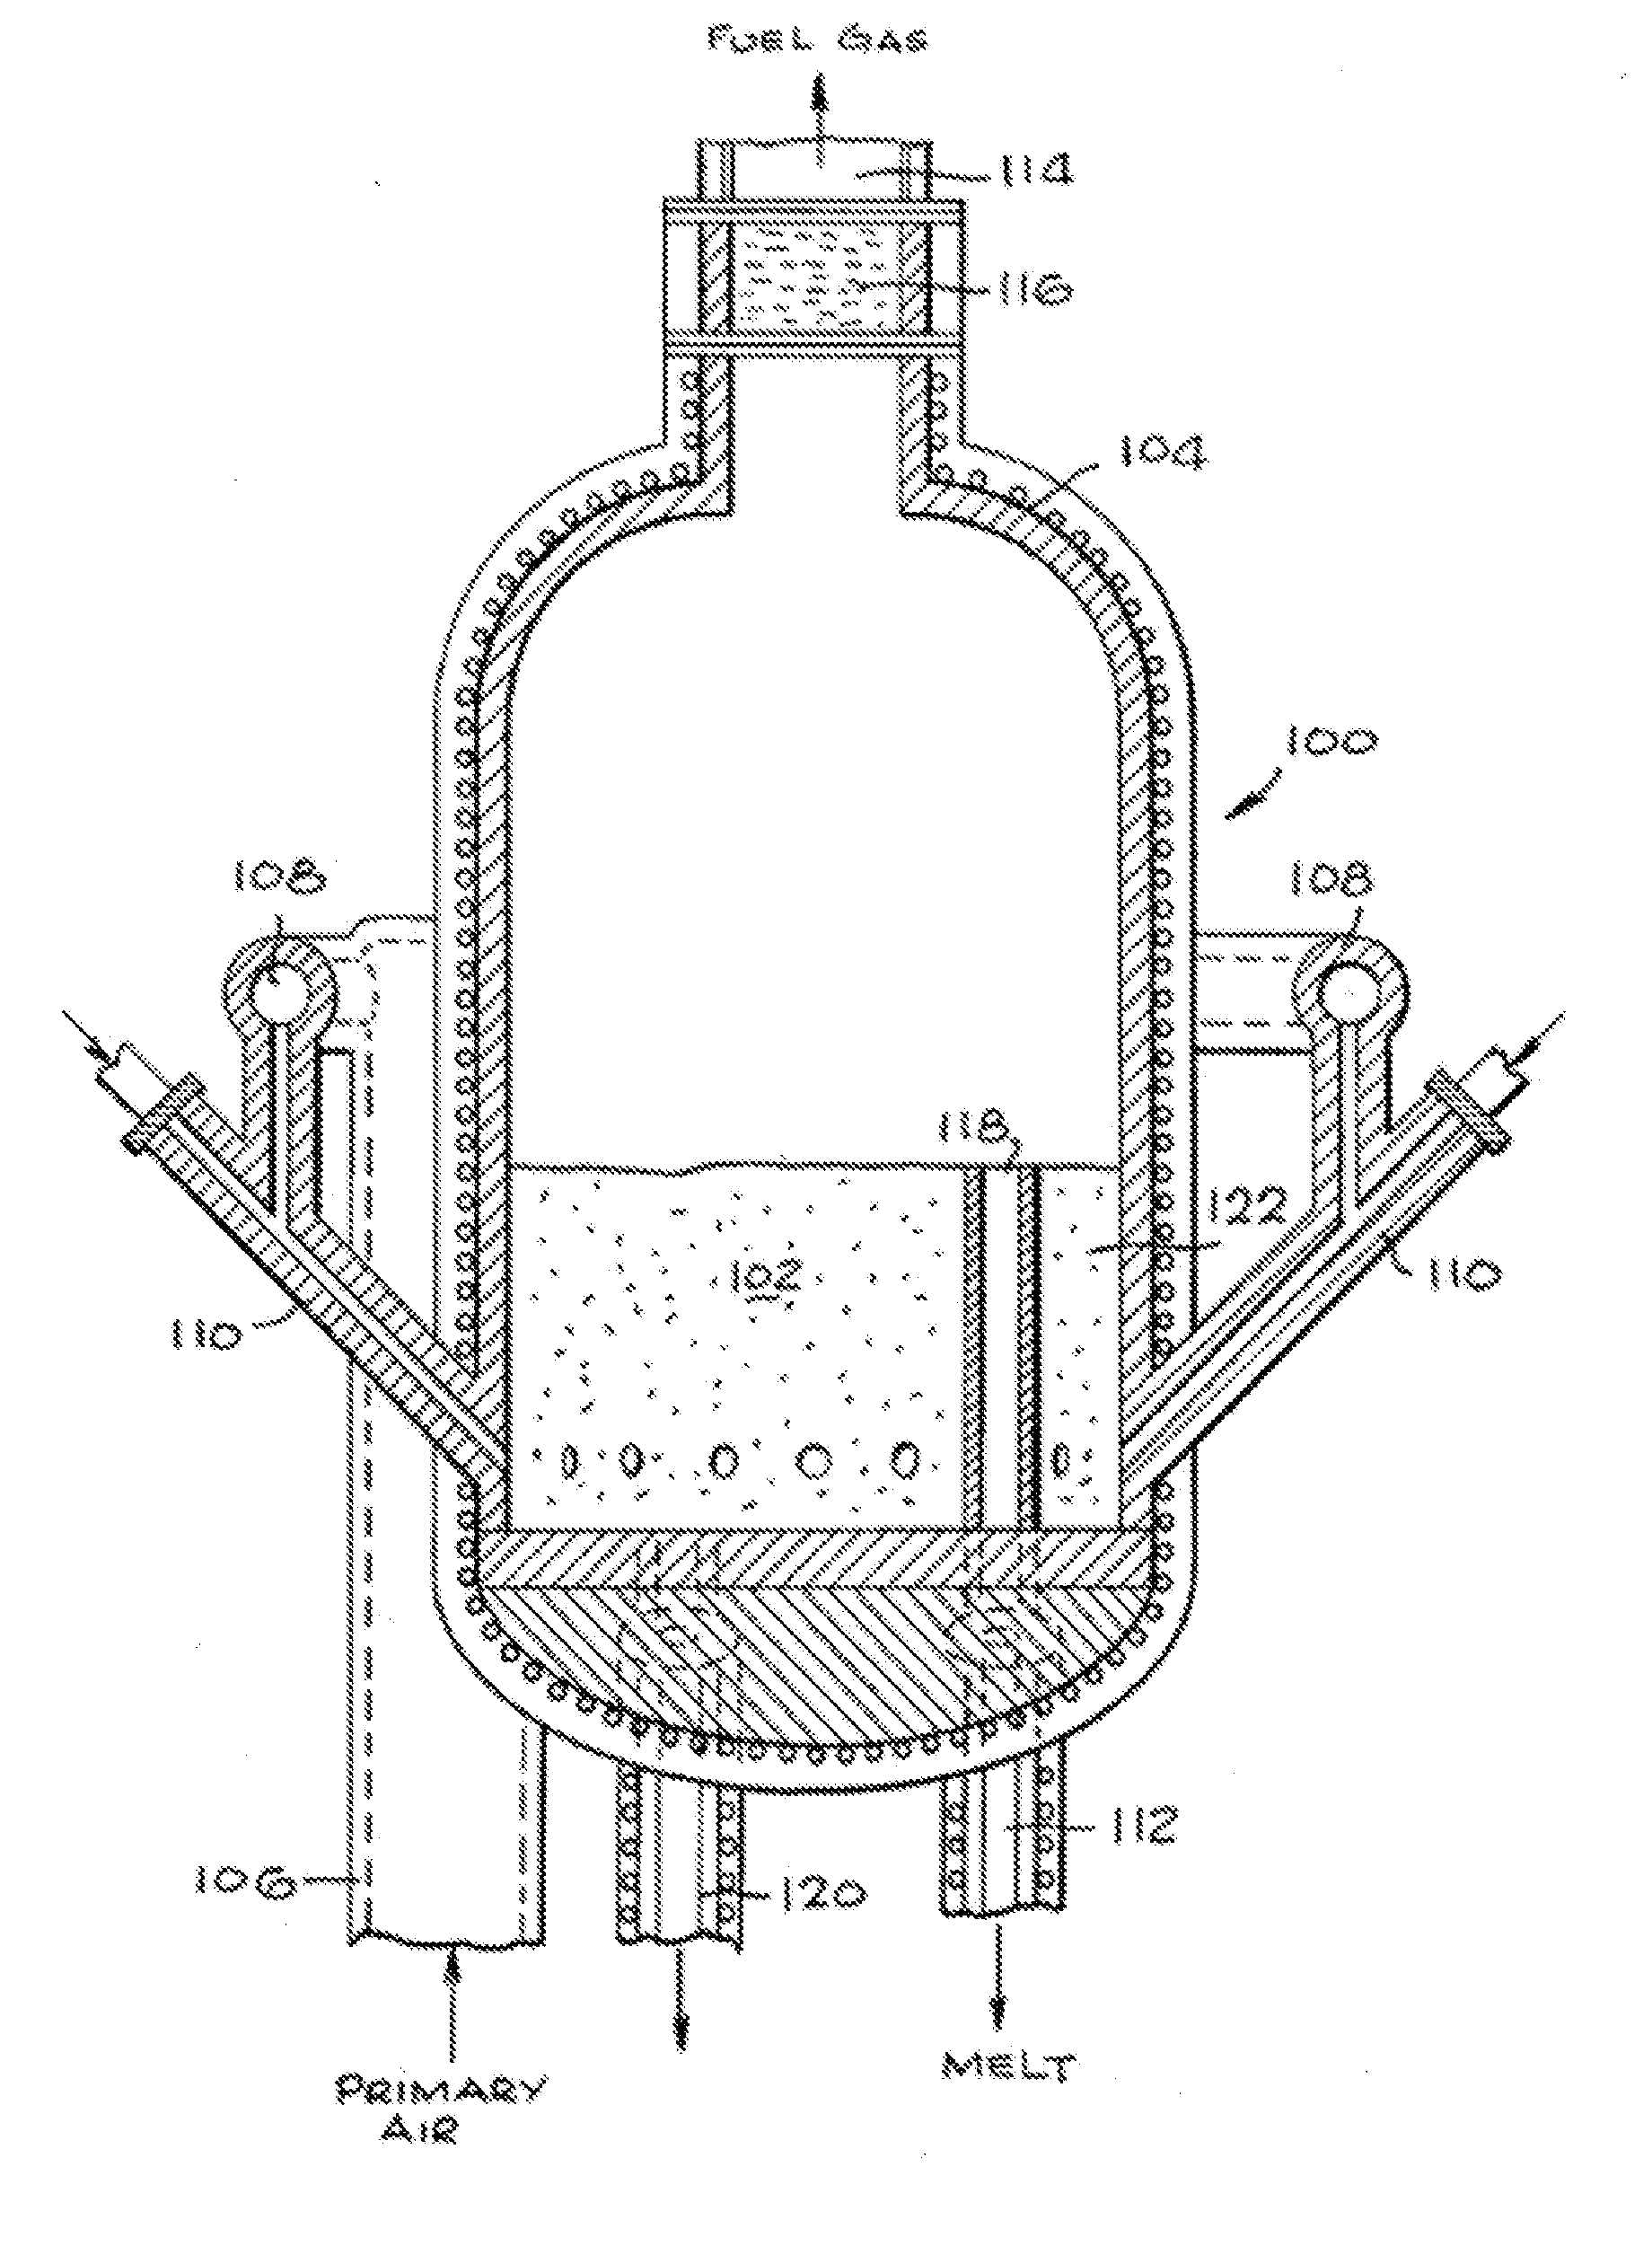 Melt gasifier system